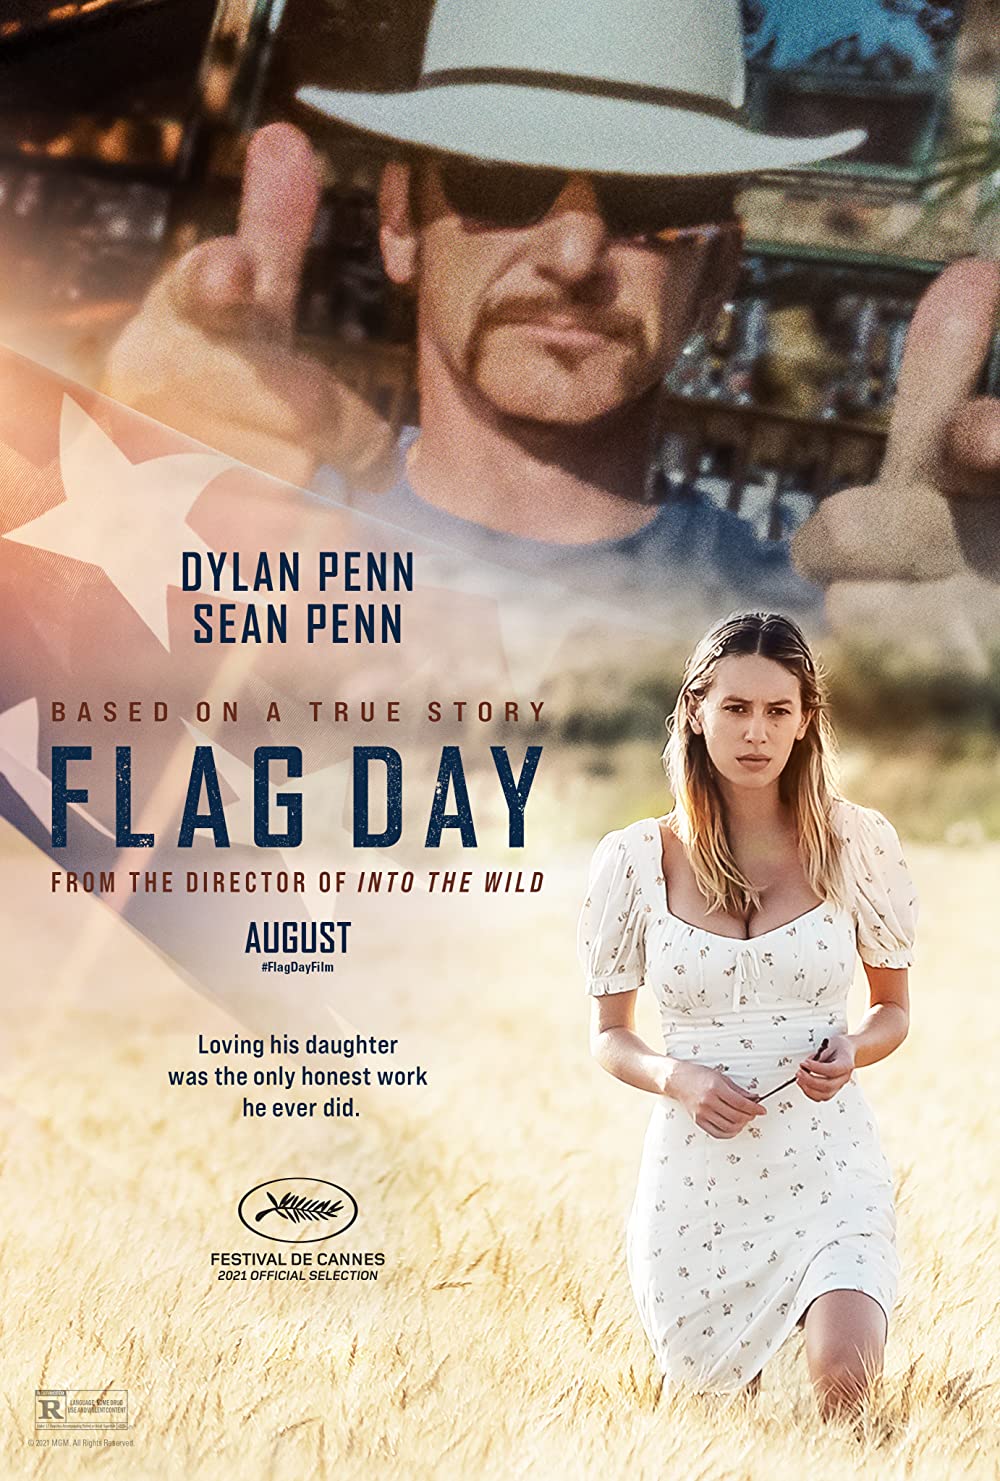 Stiahni si Filmy CZ/SK dabing  Den vlajky / Flag Day (2021)(CZ) = CSFD 55%